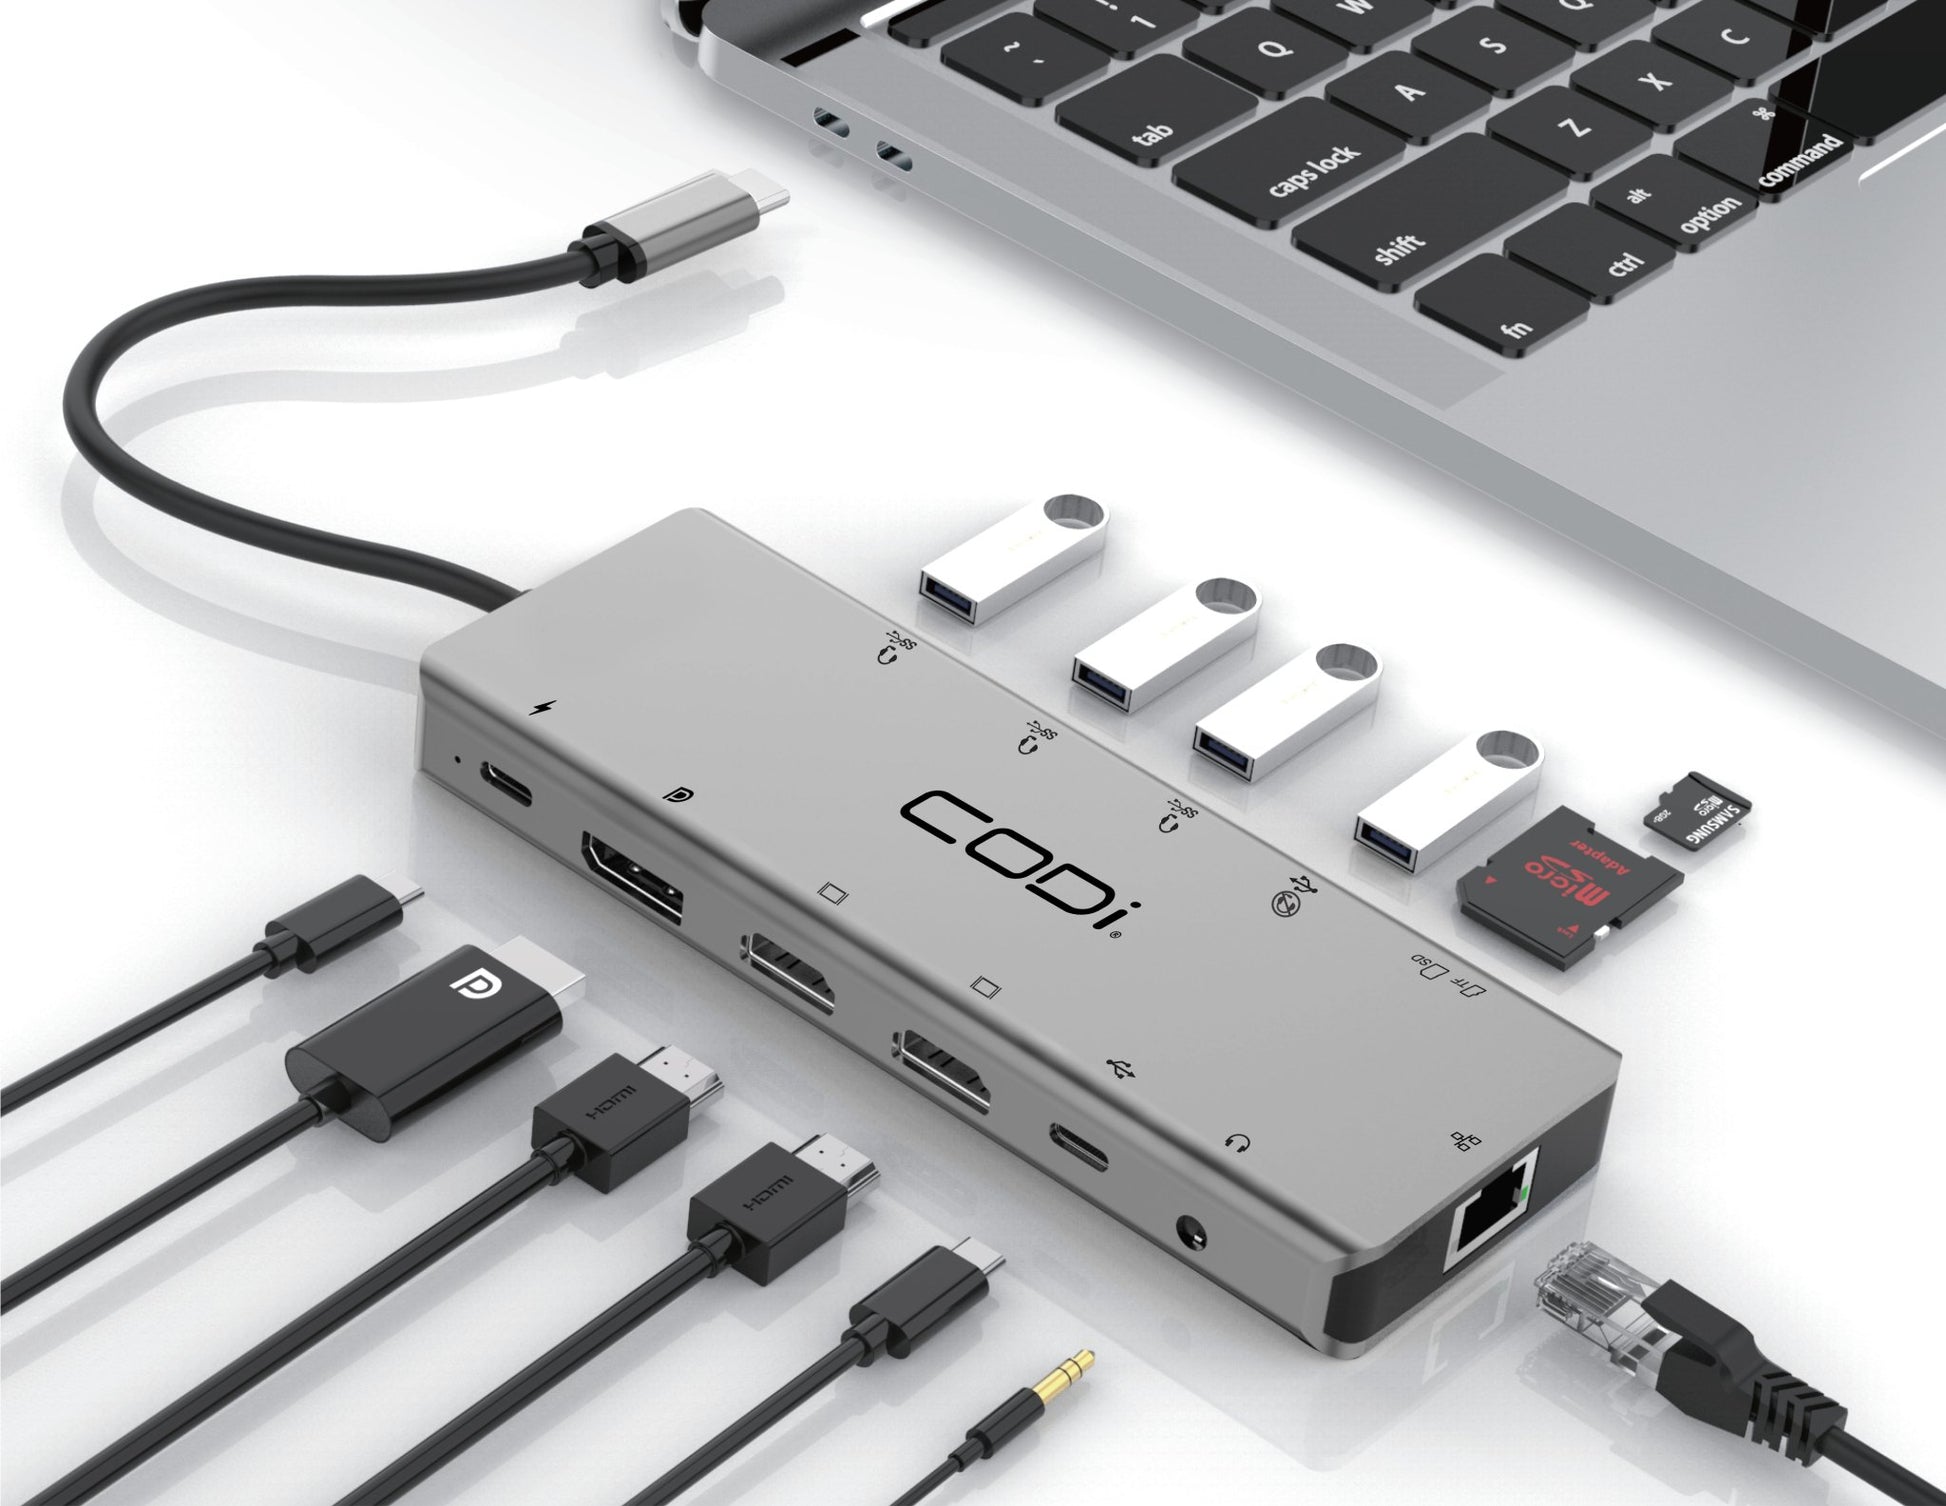 USB C Hub MacBook Pro USB Accessoires, USB C Dual Hub Multiport